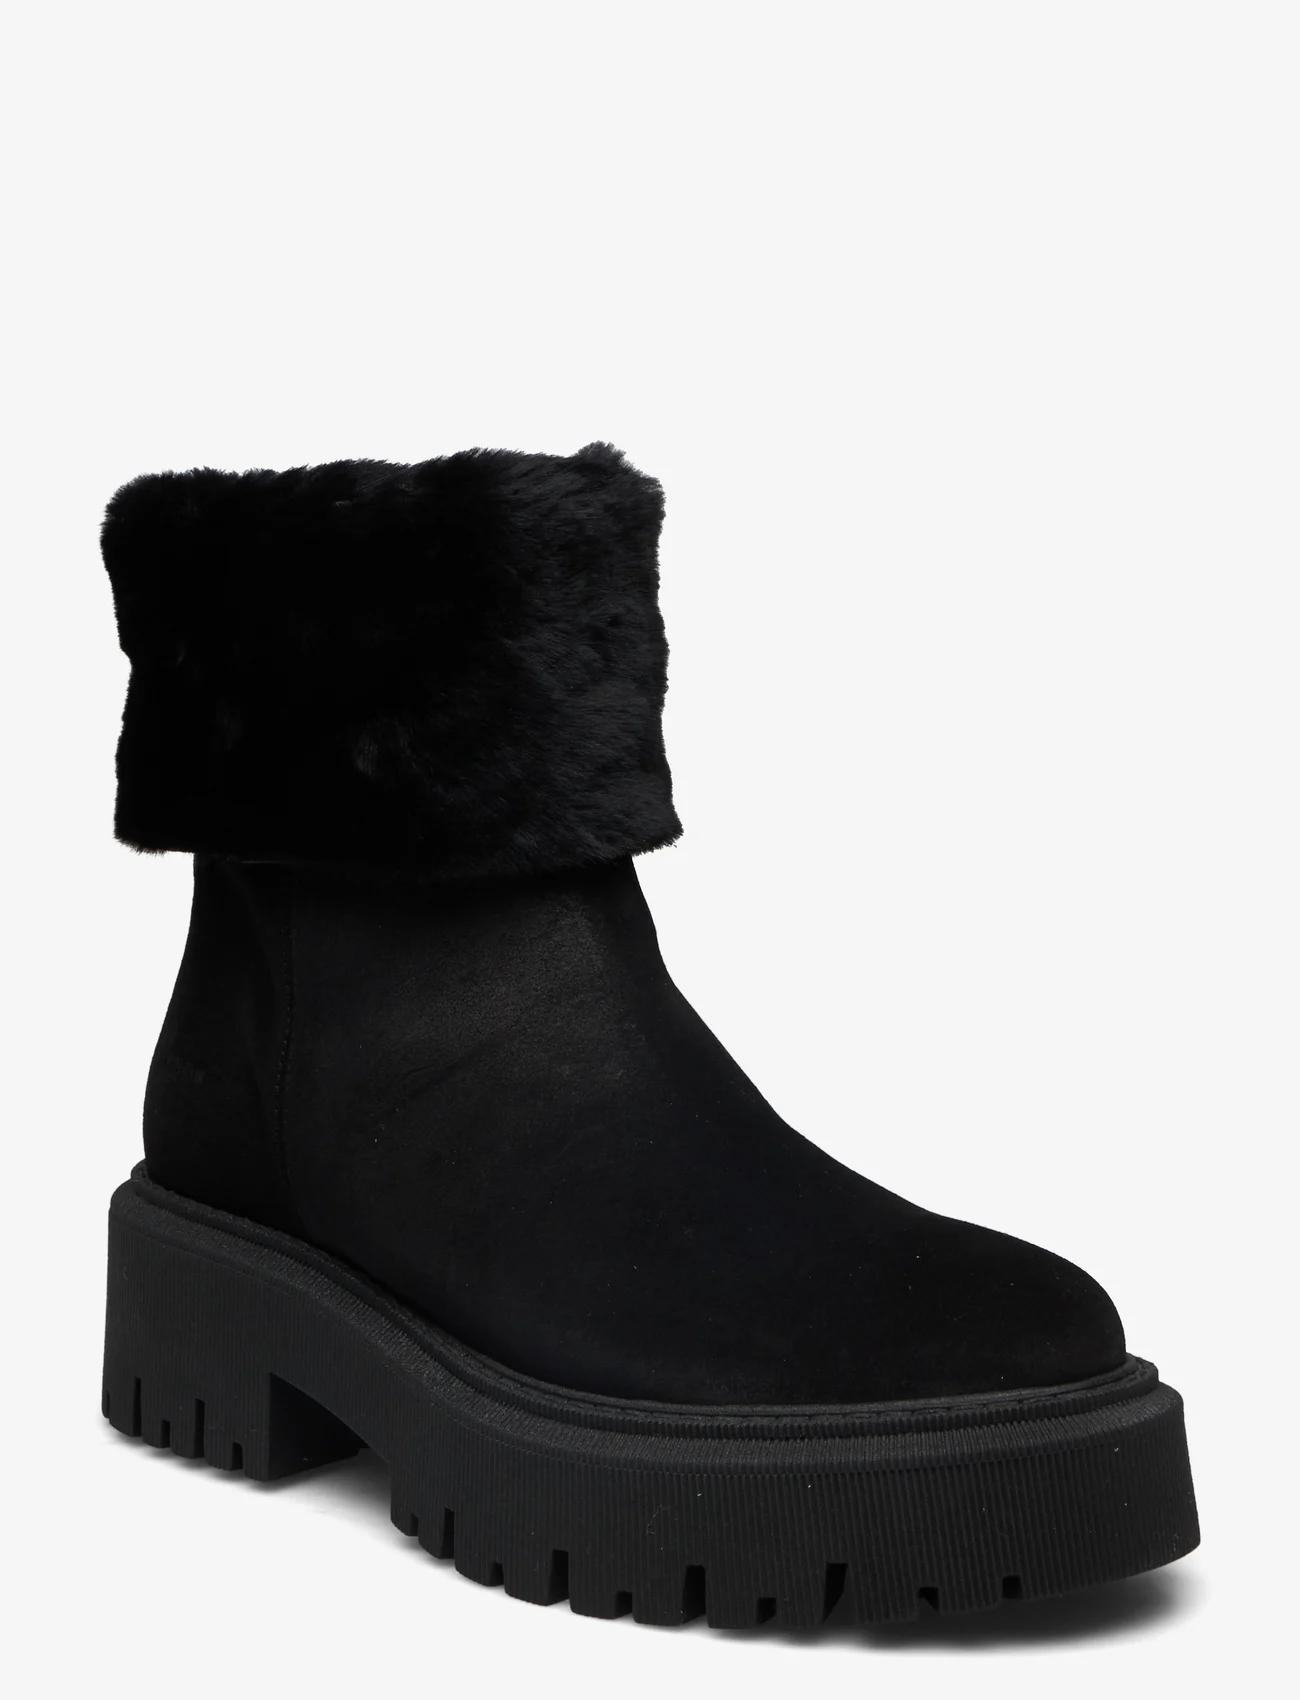 ANGULUS - Boots - flat - naised - 1163/2014 black/black lamb woo - 0